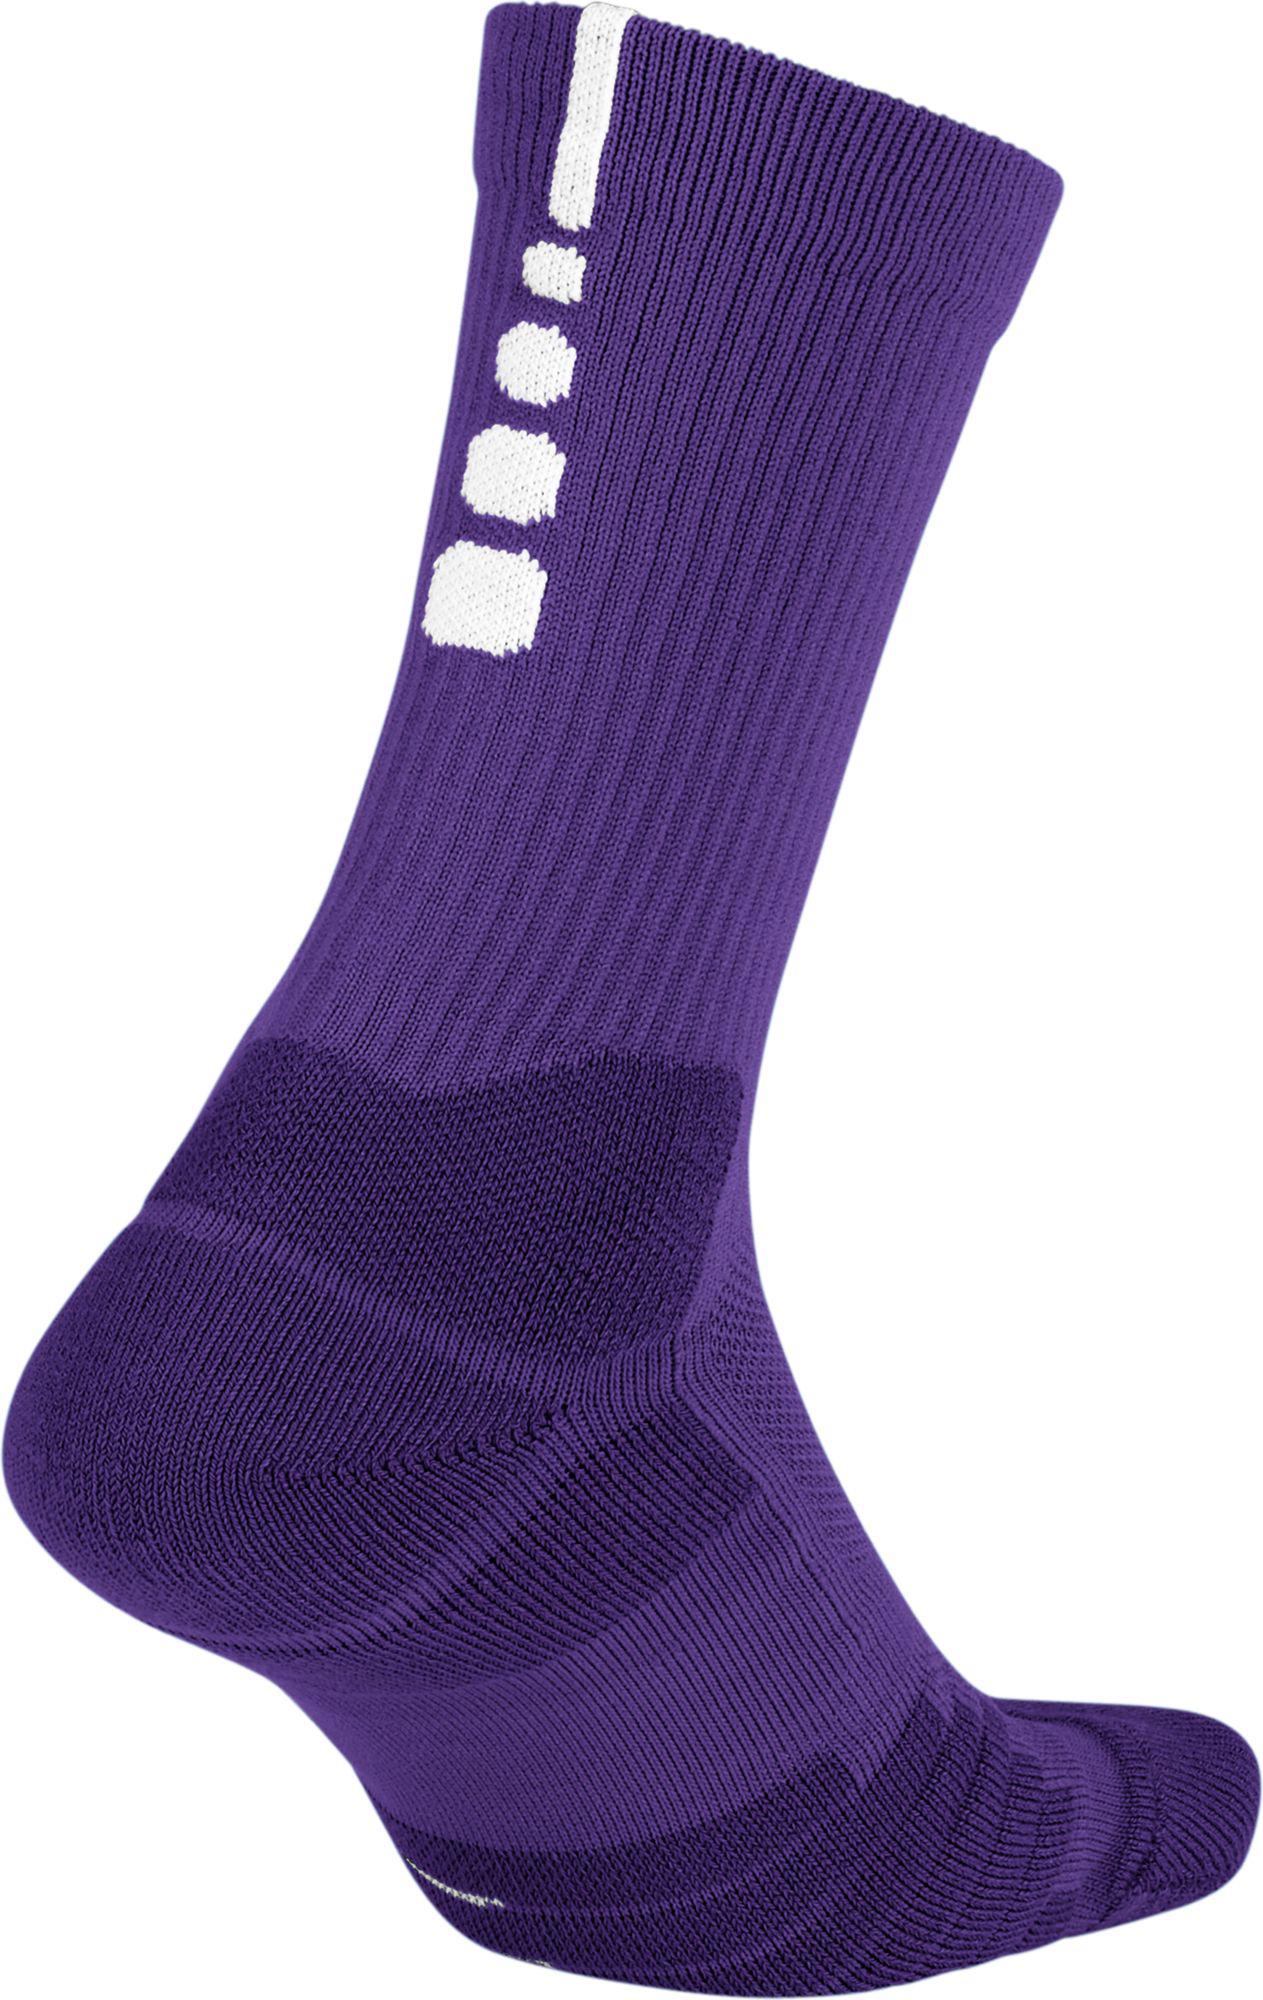 Nike Synthetic Elite Quick Nba Basketball Crew Socks in Purple/White (Purple)  for Men - Lyst